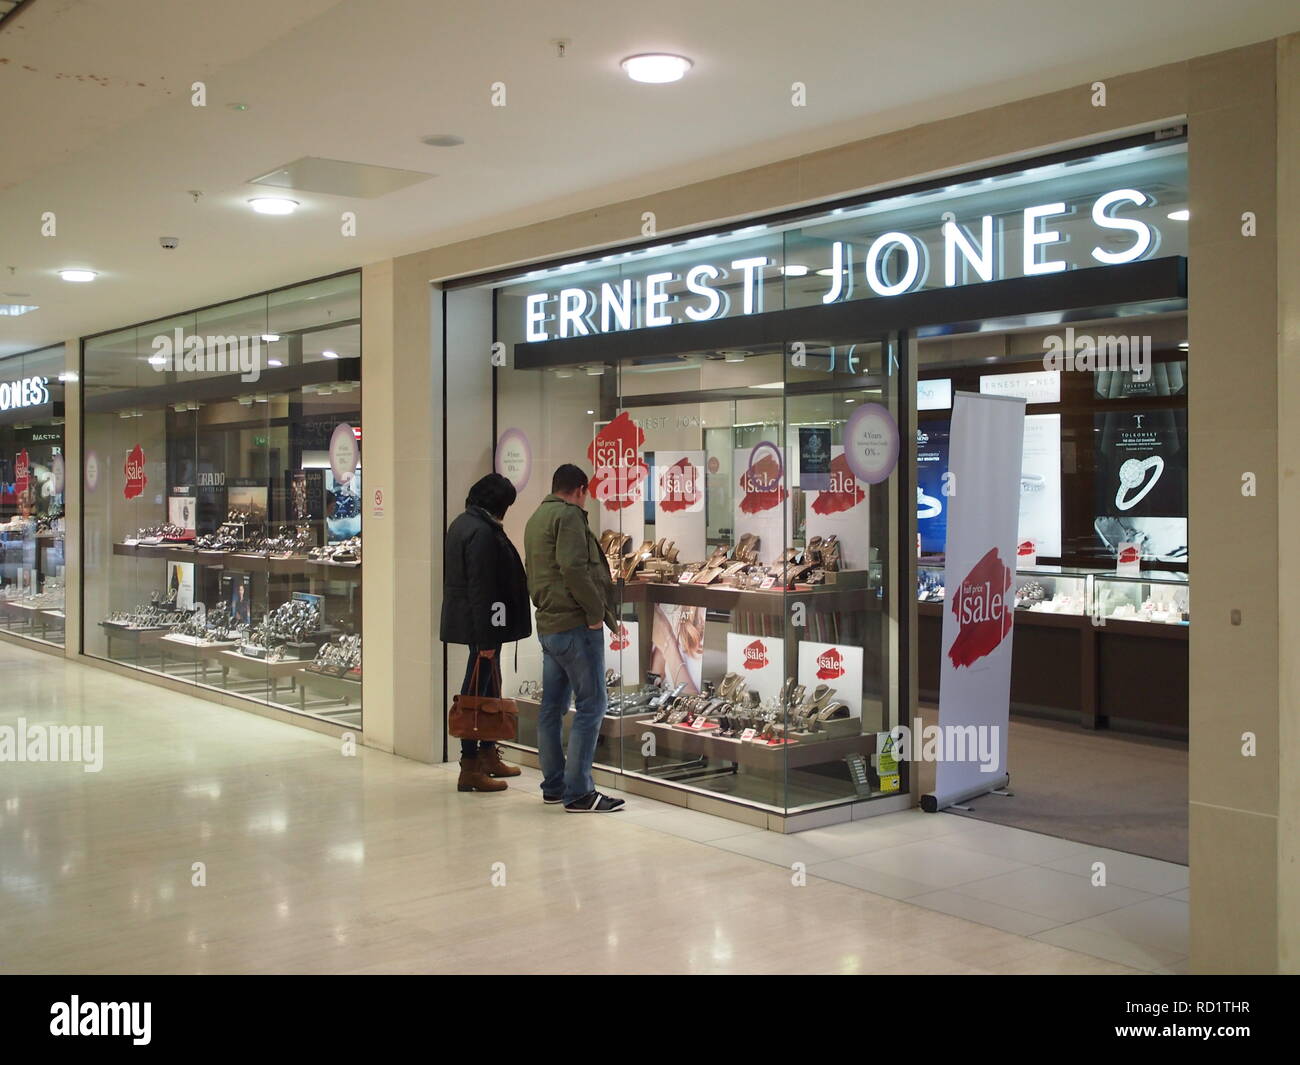 Ernest Jones jewellery shop in Milton Keynes shopping centre Stock Photo